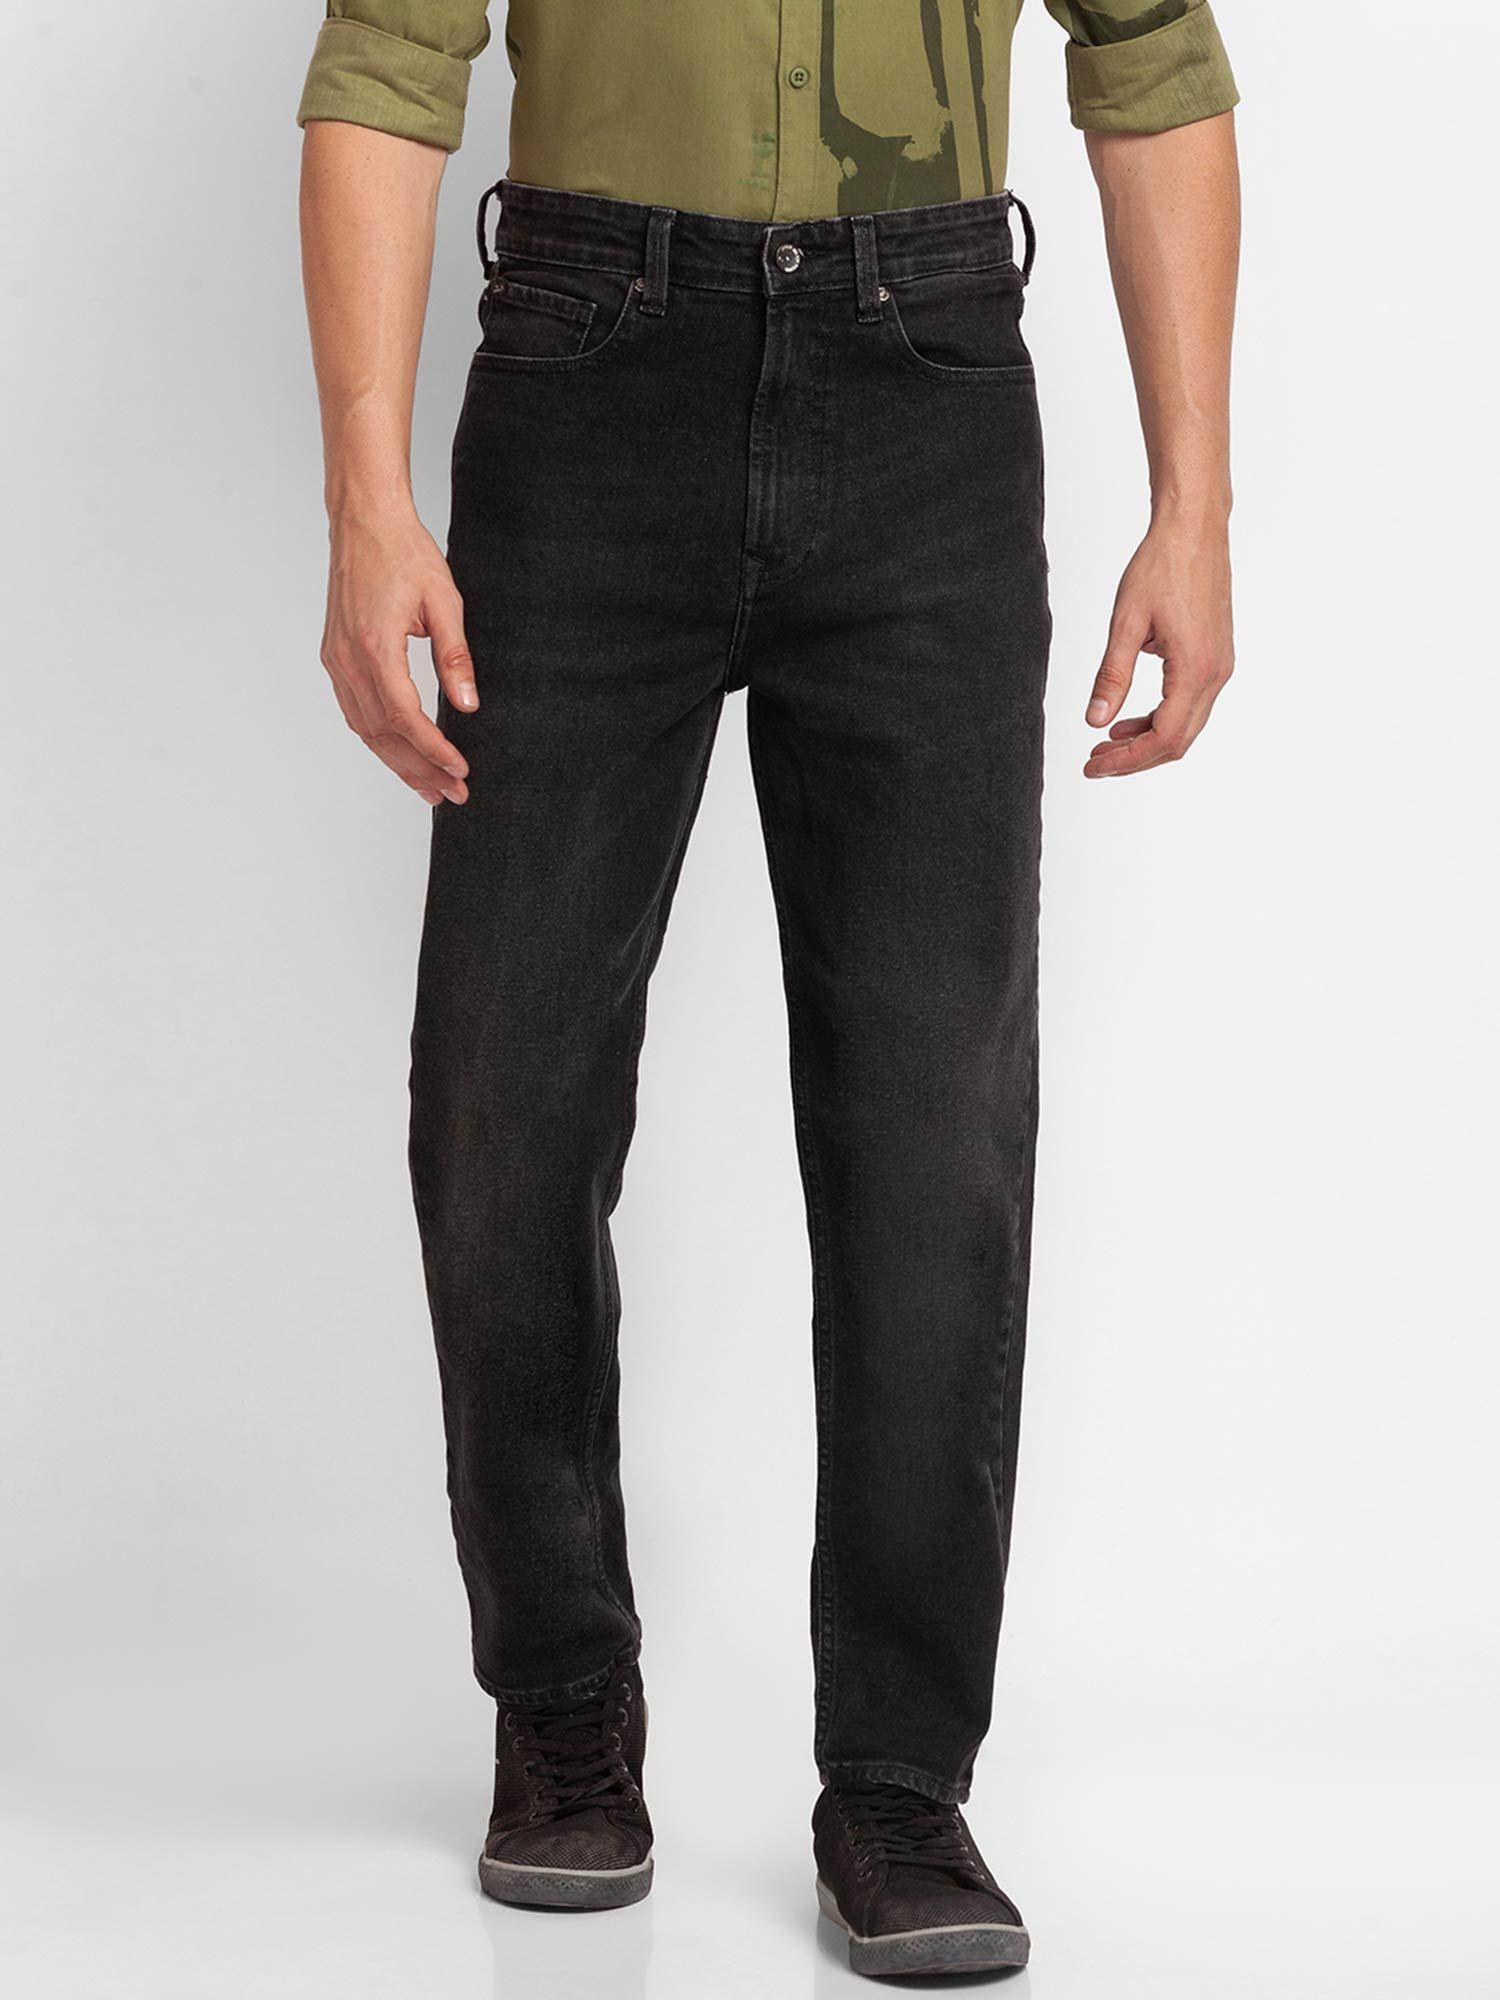 carbon-black-cotton-loose-fit-regular-length-jeans-for-men-(renato)